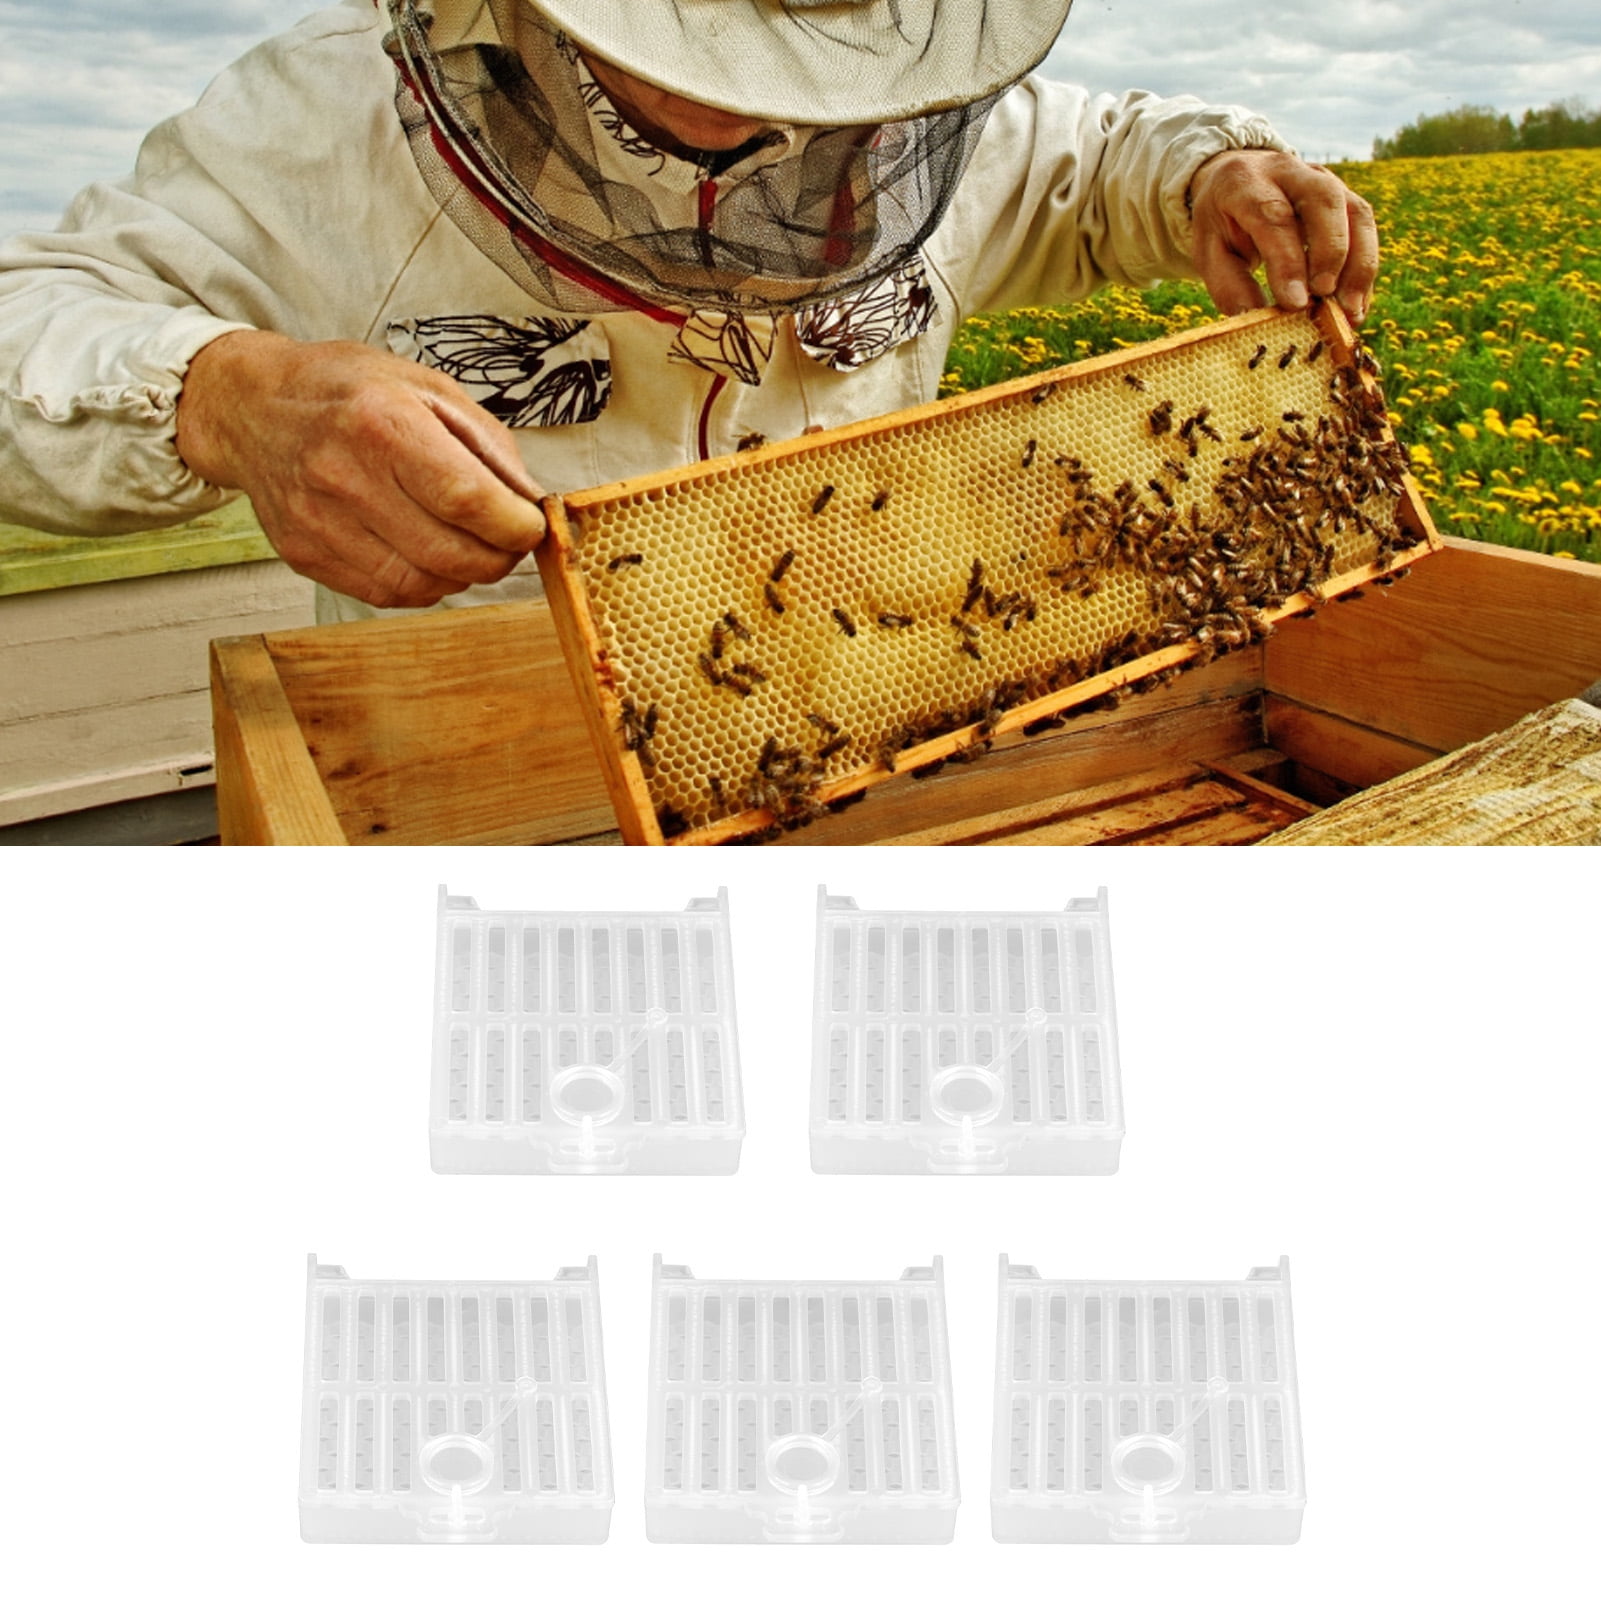 10pcs Plastic Queen Bee Cages Isolator Rearing Beekeeper Beekeeping To N ji 